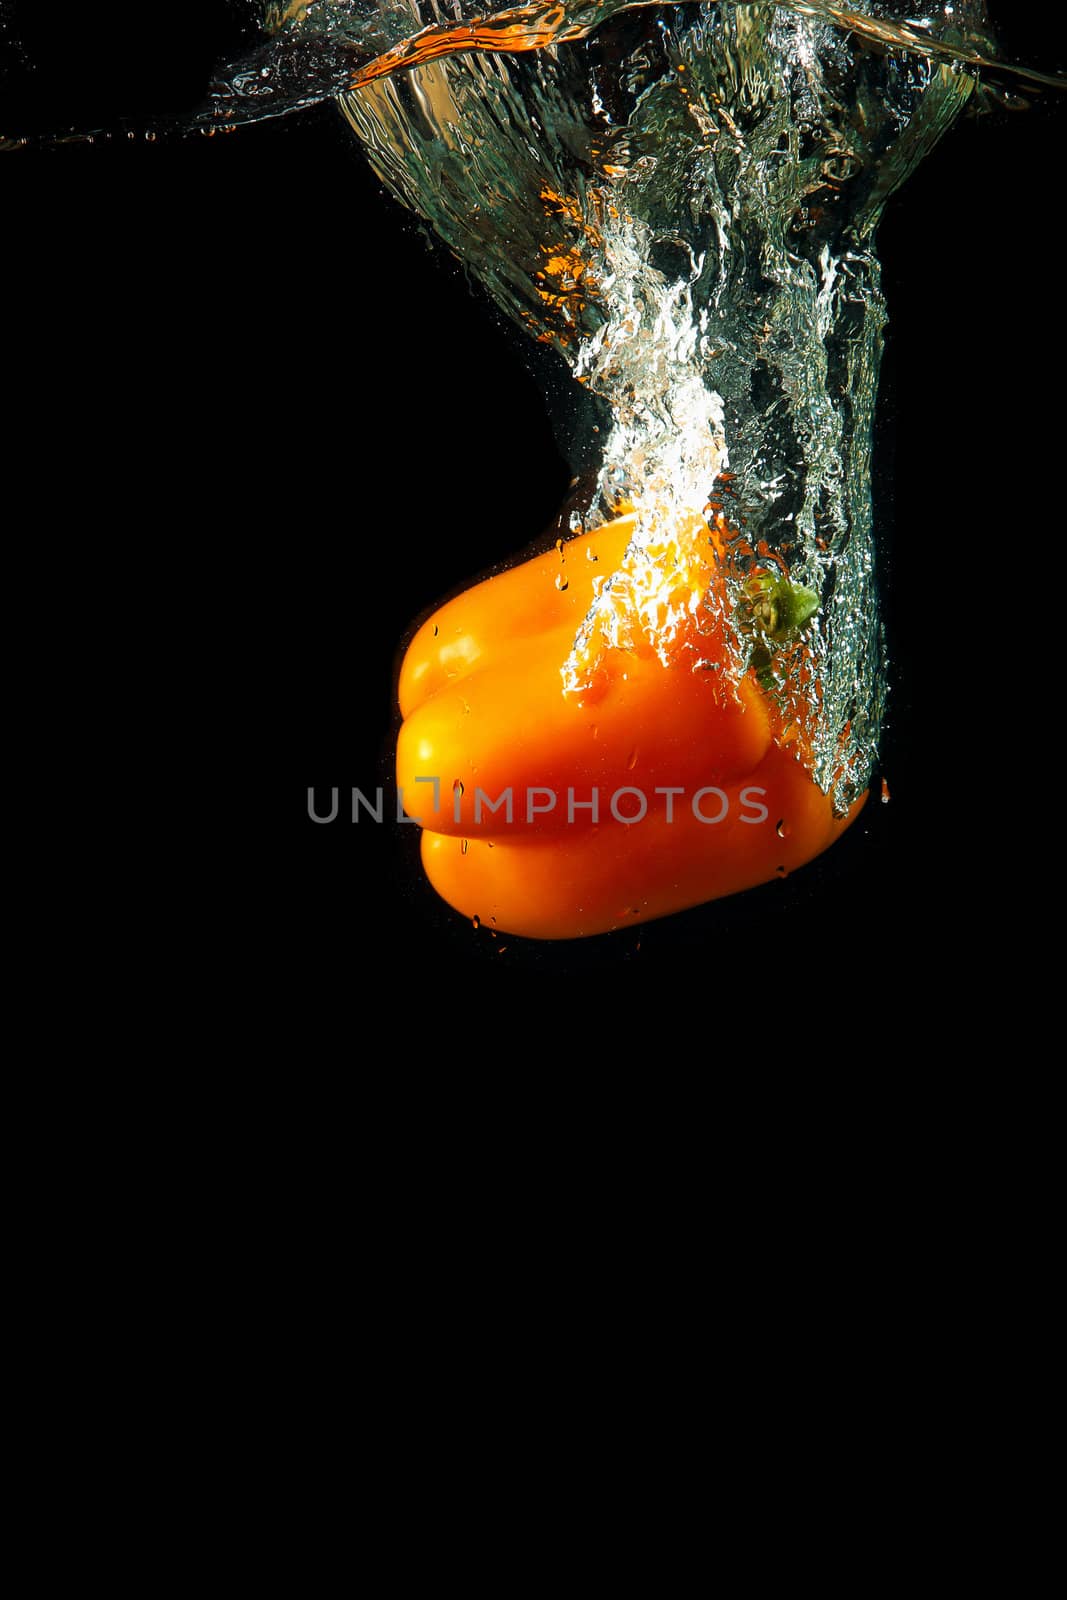 Colored orange paprika in water splashes on black background